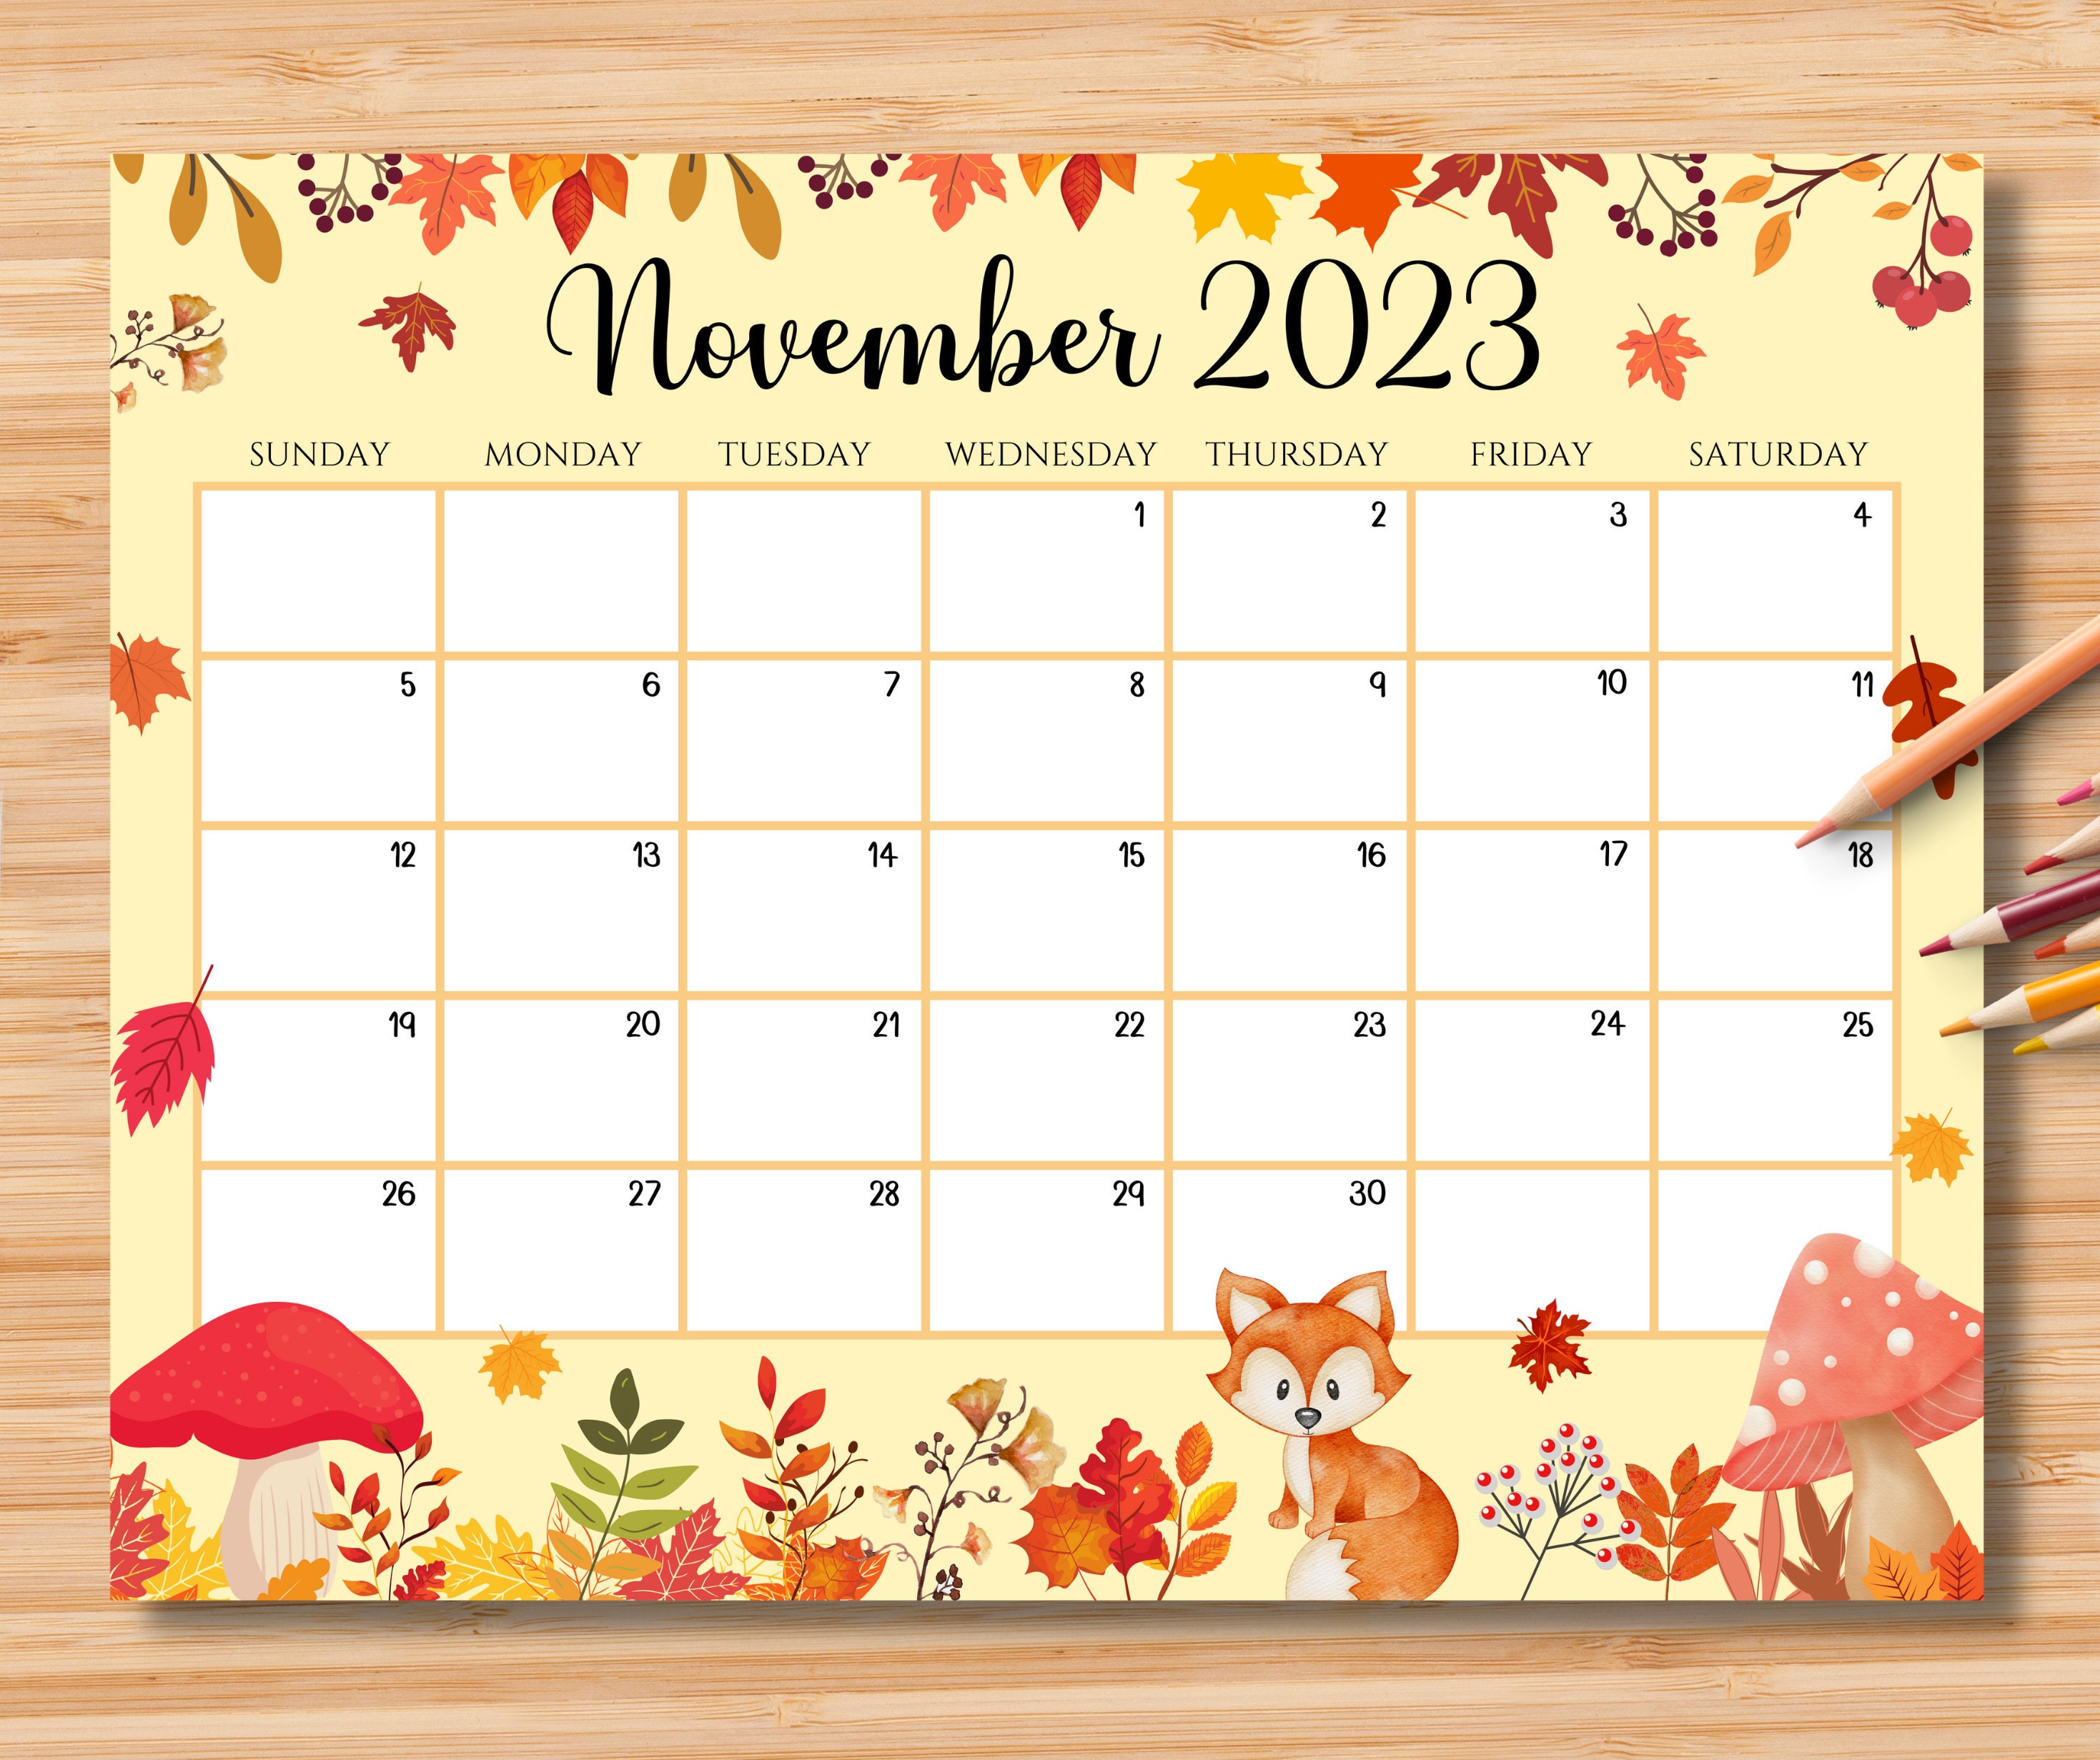 november-2023-calendar-kids-get-calender-2023-update